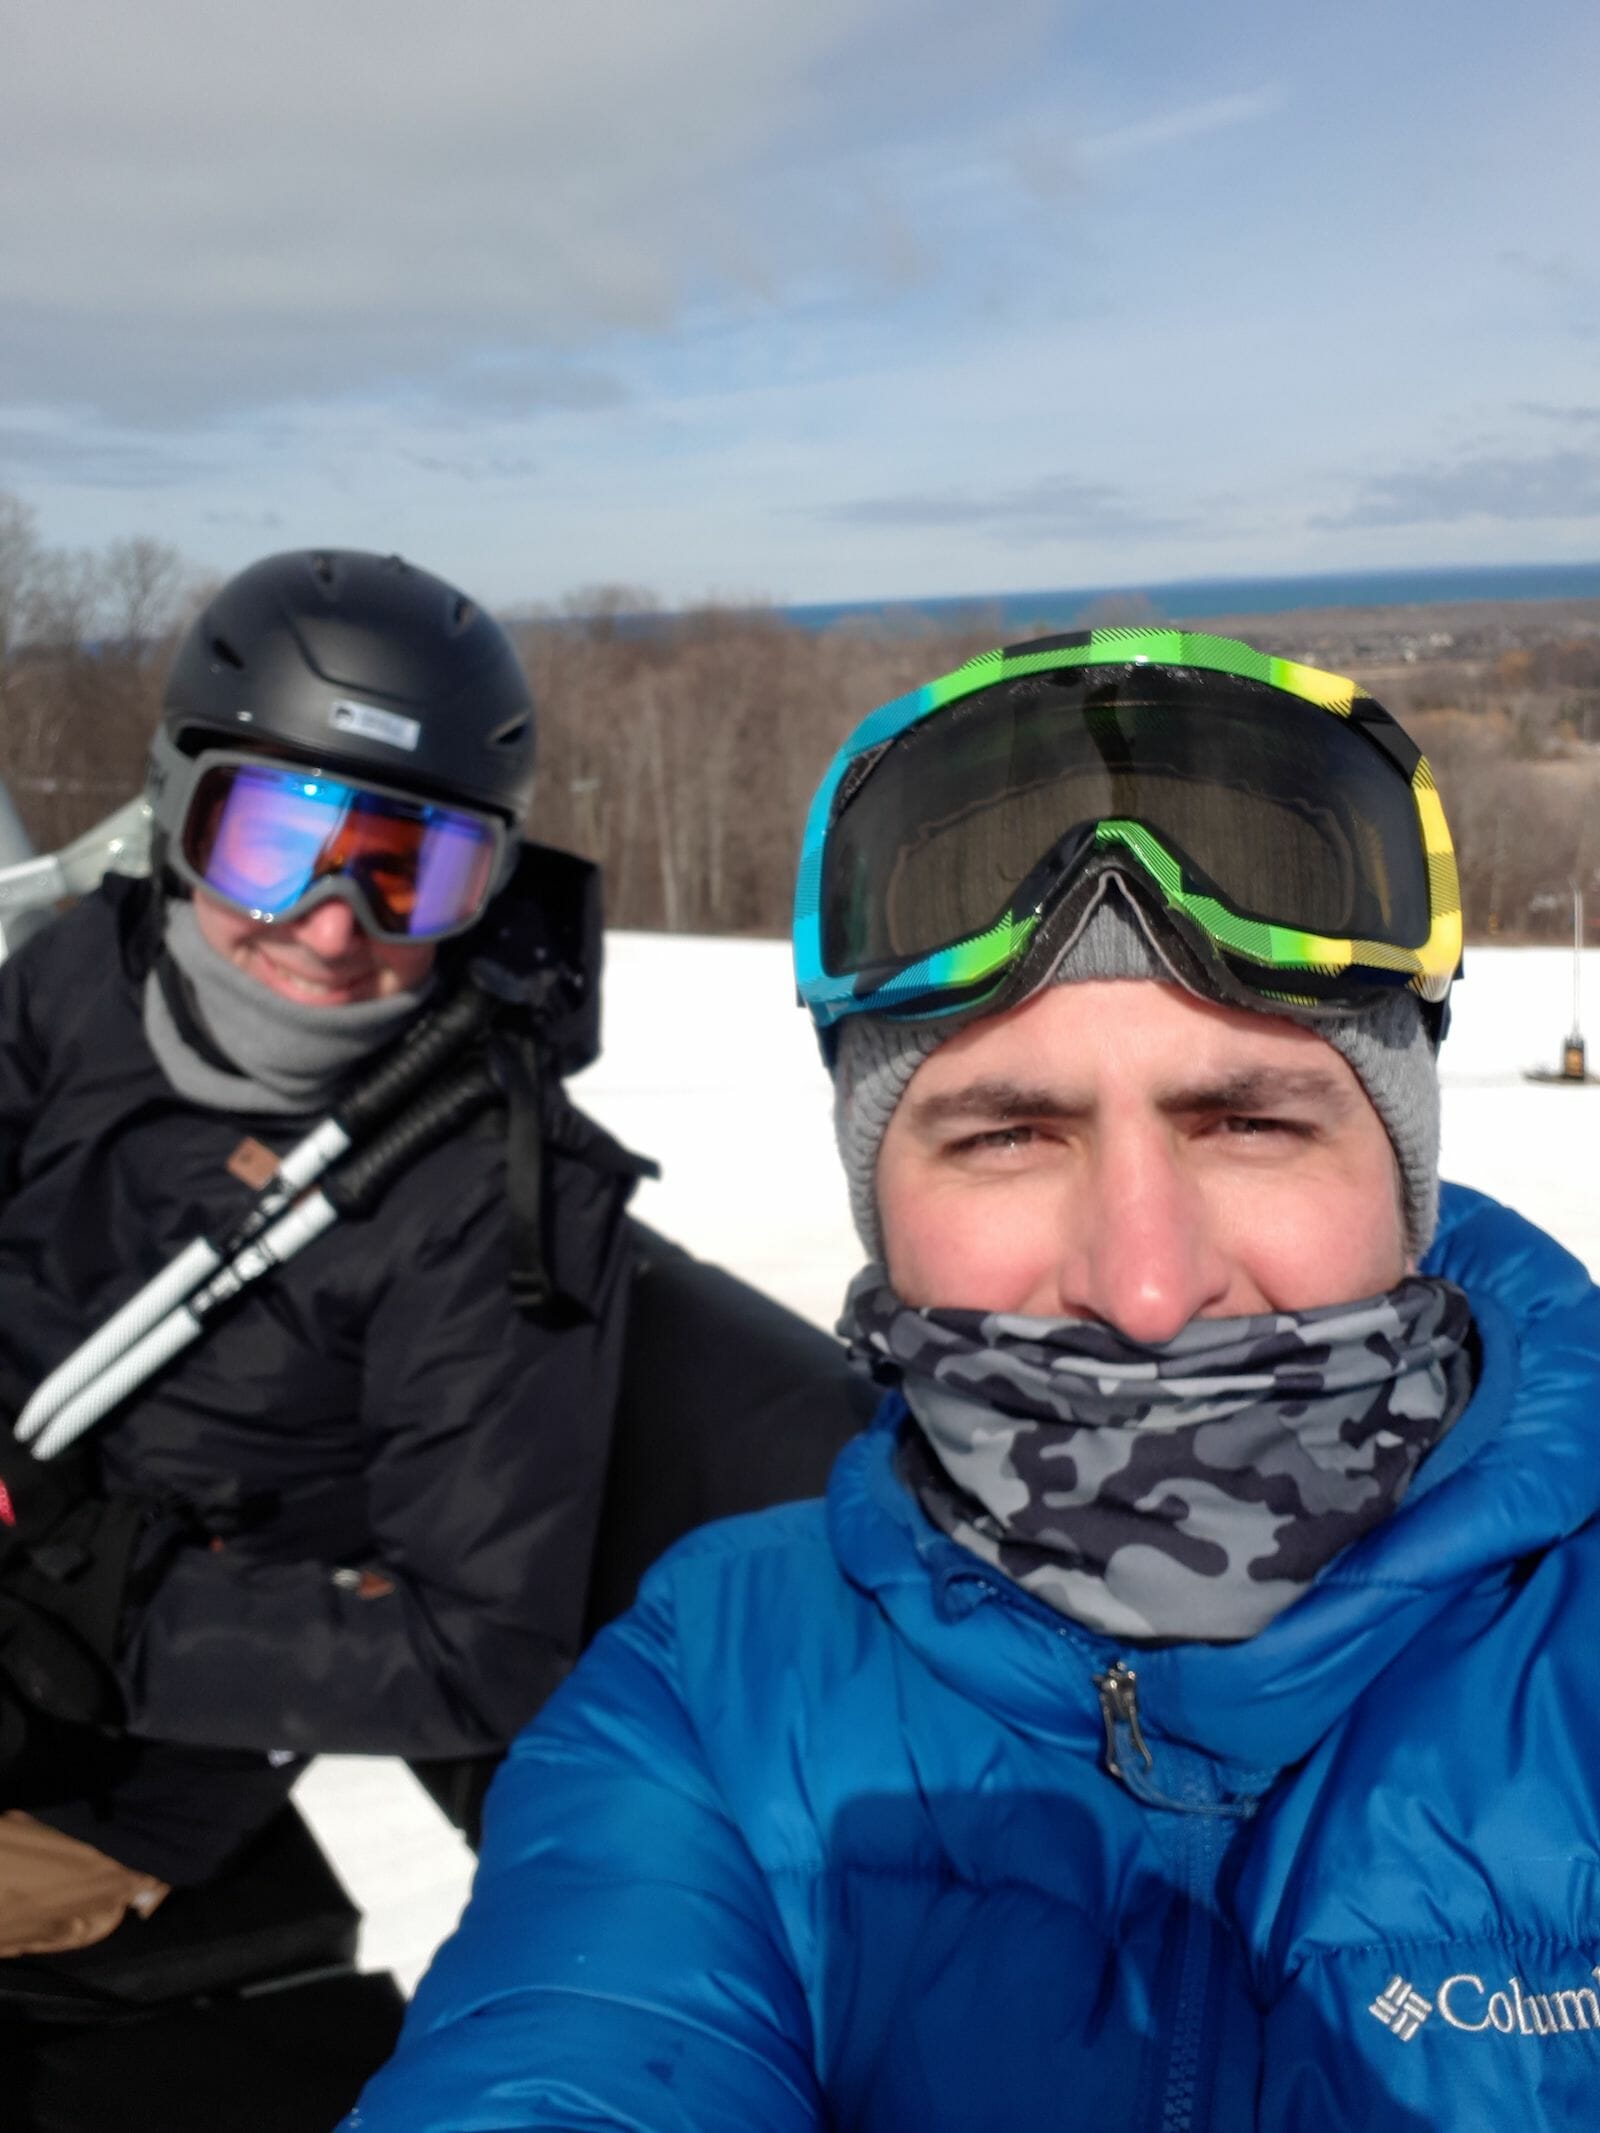 SkiMobi - Mobiers Vander and Bruno hit the top of the slopes at Blue Mountain during SkiMobi